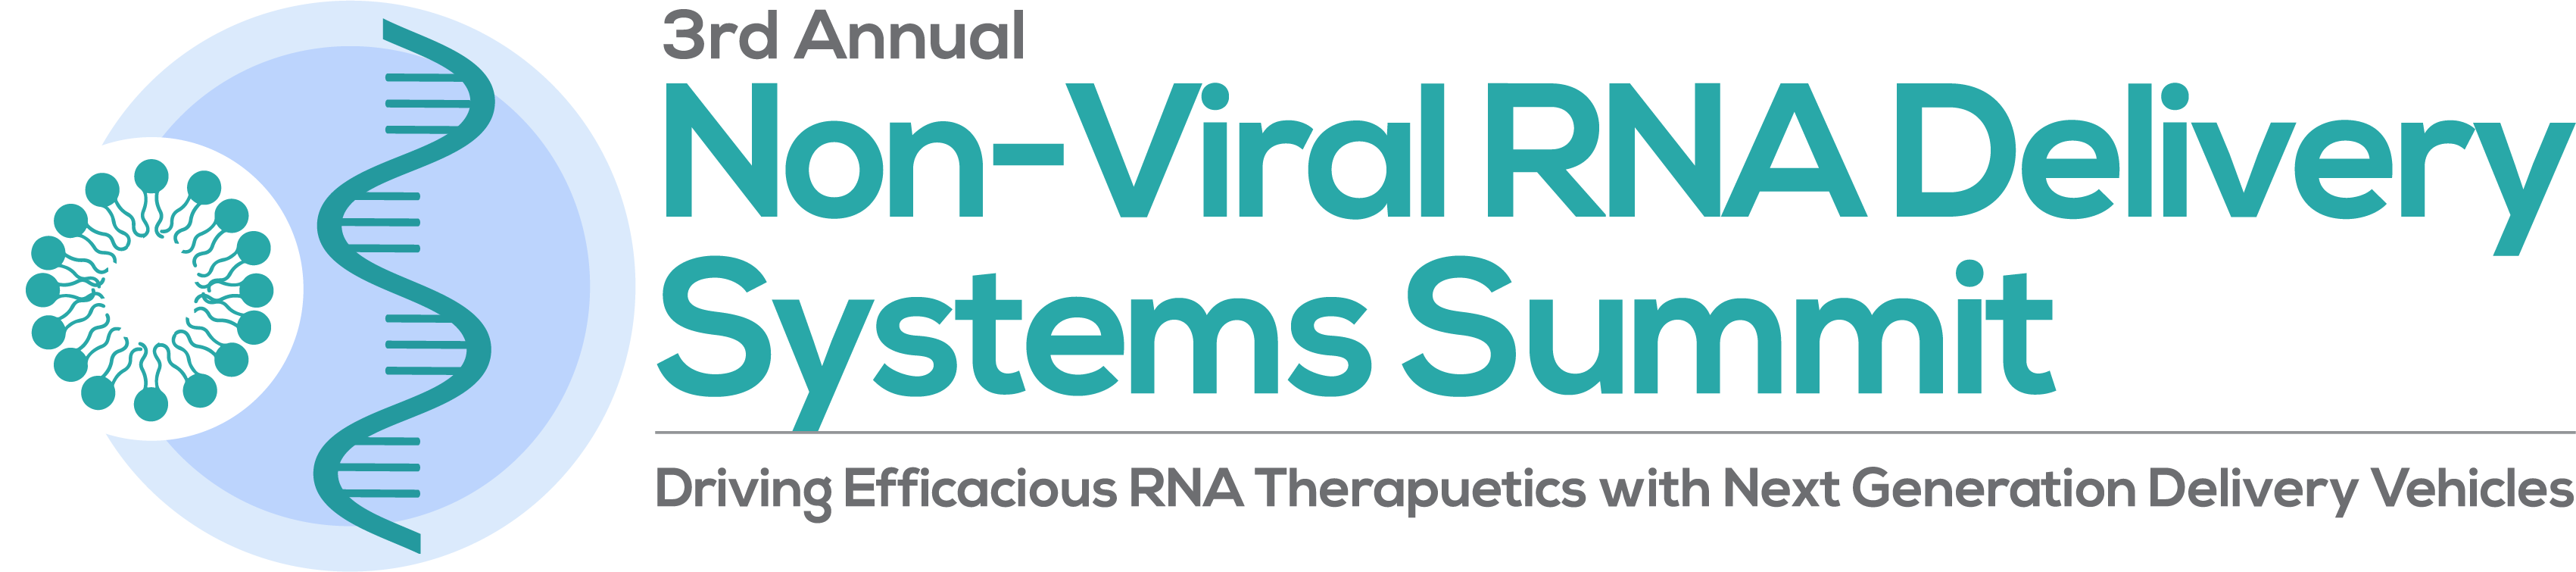 3rd Annual Non-Viral RNA Delivery Systems Summit STRAPLINE